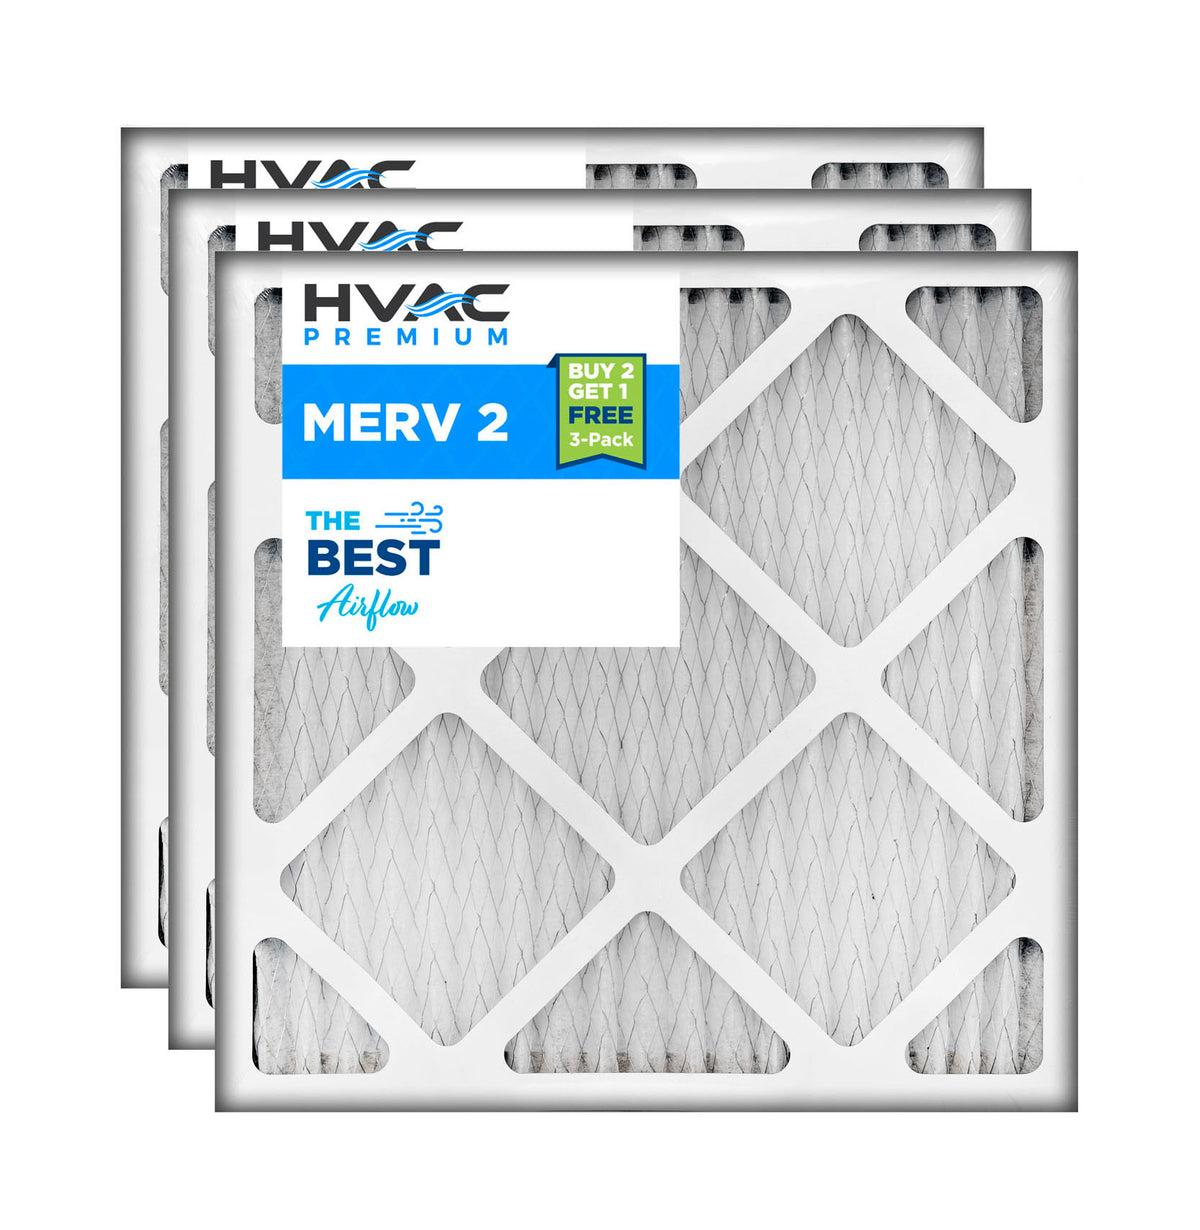 18 x 12 Merv 2 HVAC Pleated Filter, 3-Pack